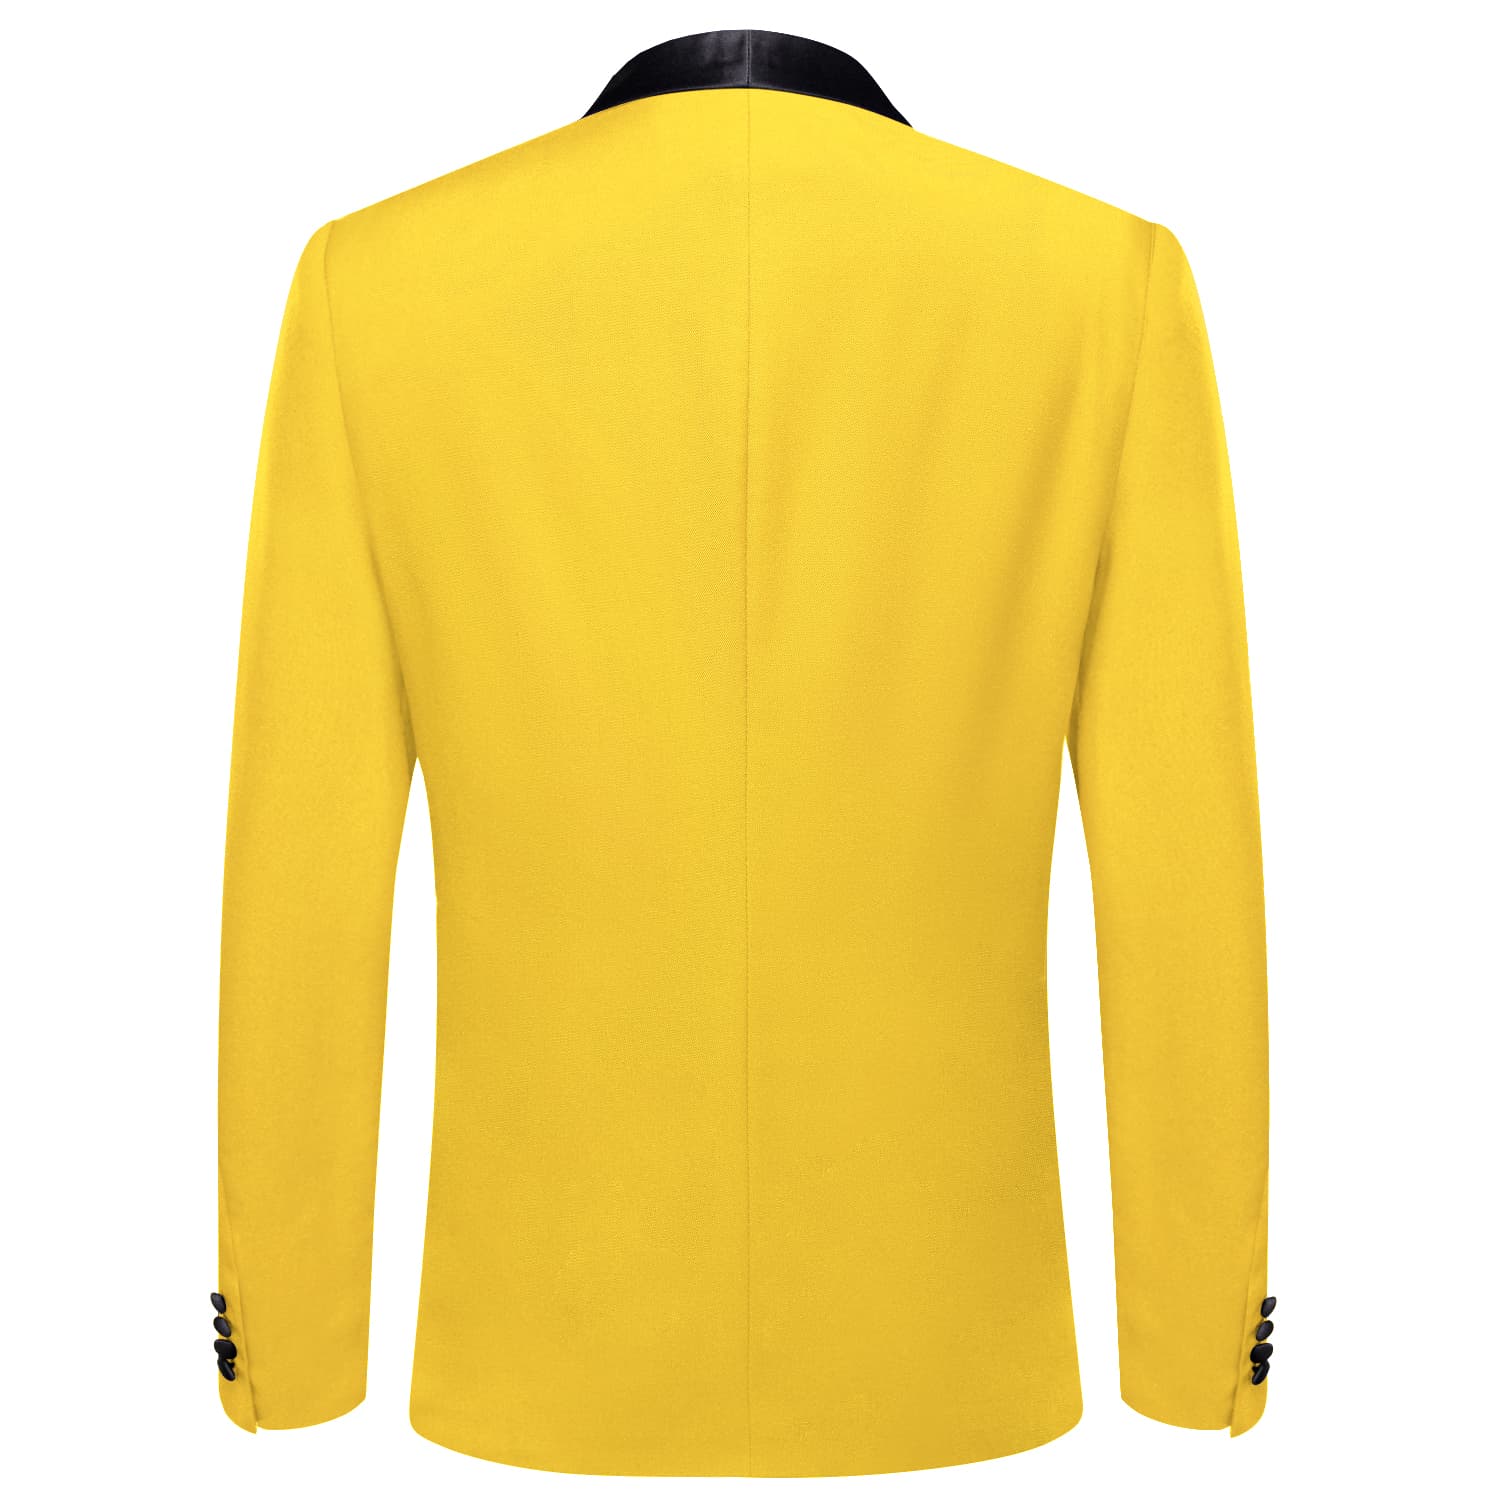 Hi-Tie Black Shawl Collar Gold Solid Blazer Bowtie Suit Set